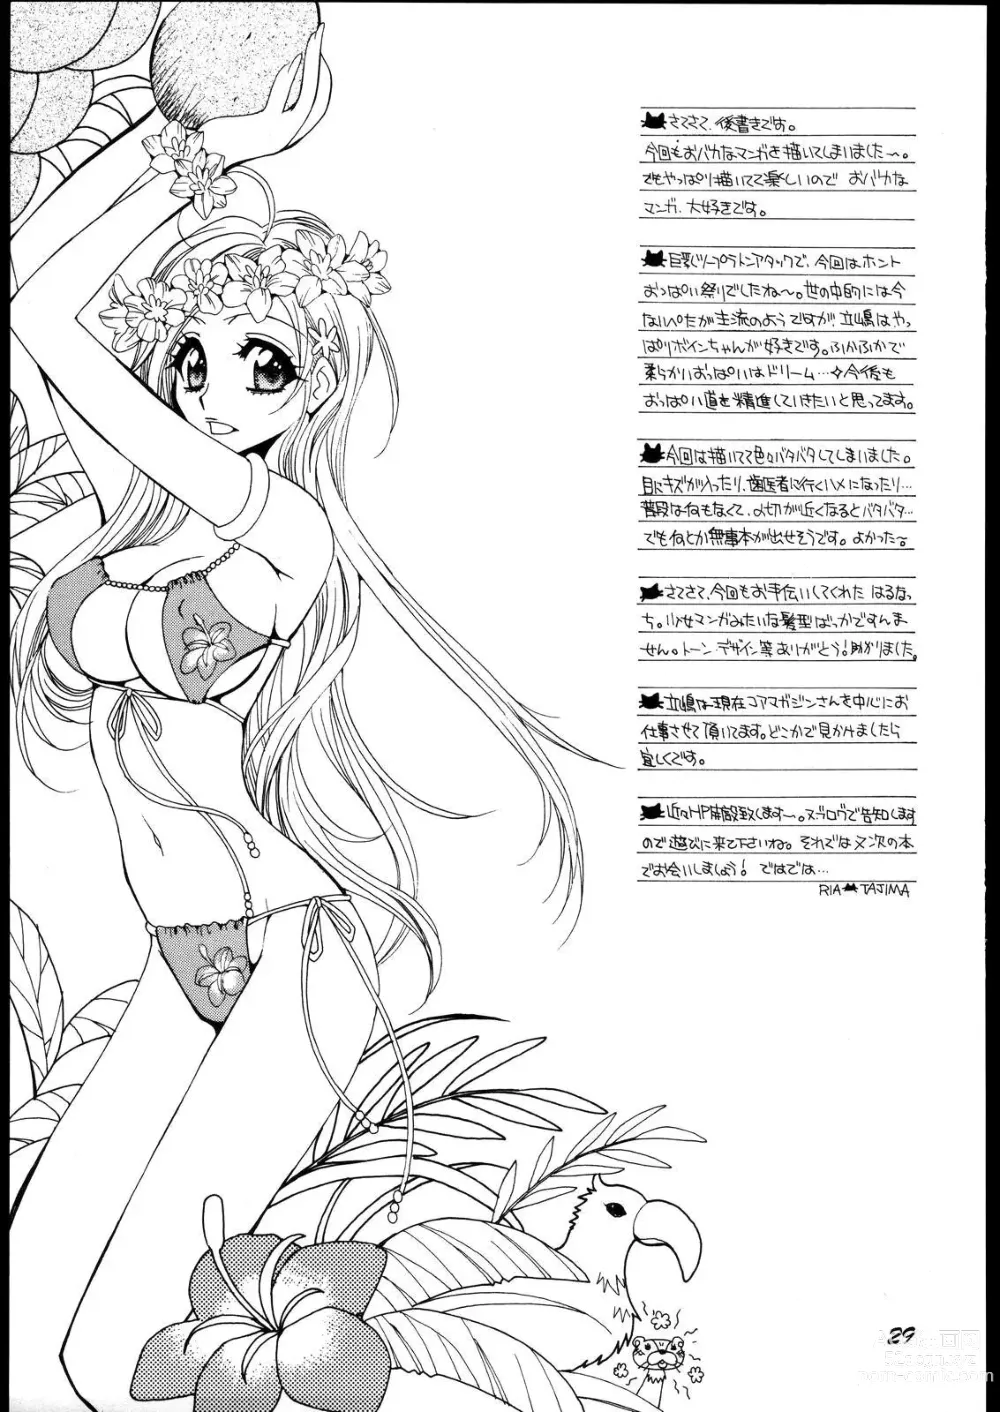 Page 28 of doujinshi Love Potion #9